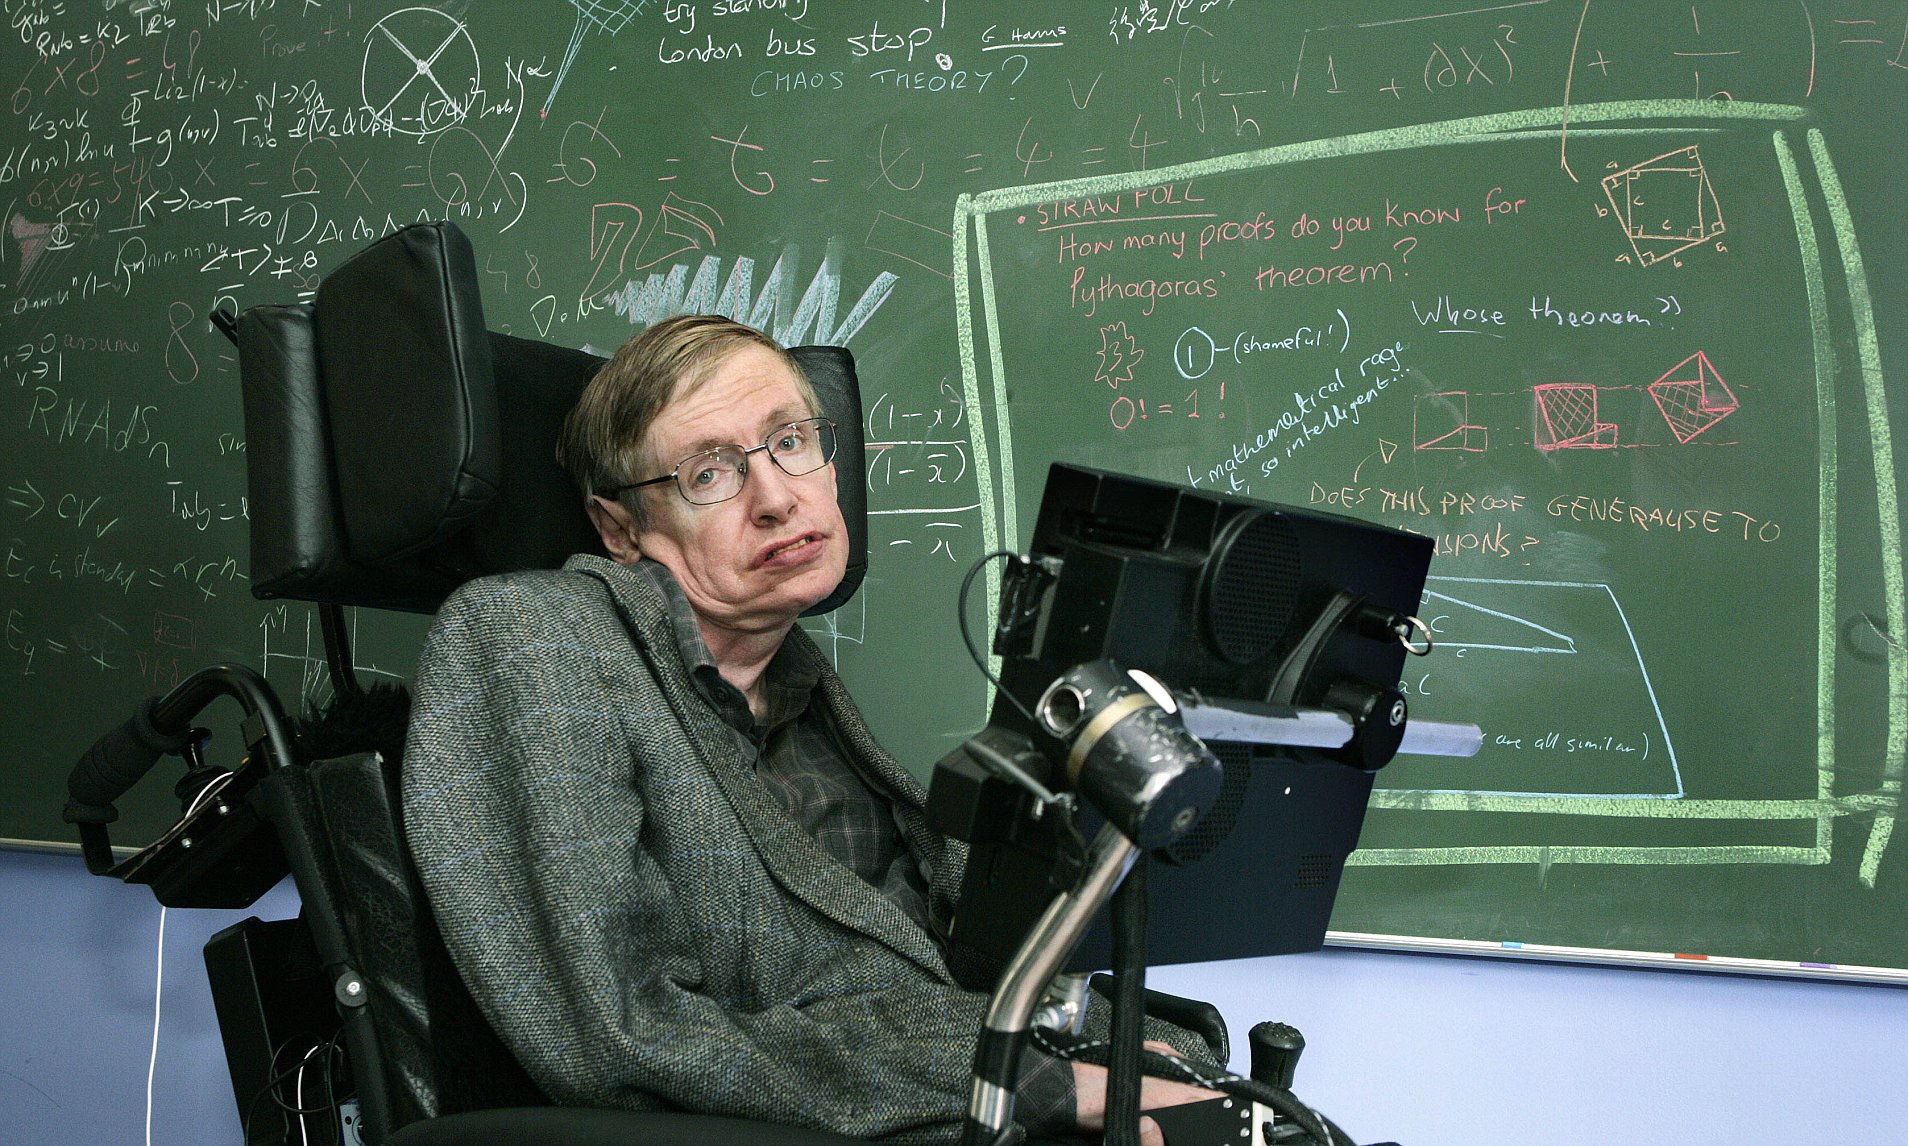 Stephen Hawking next to greenboard